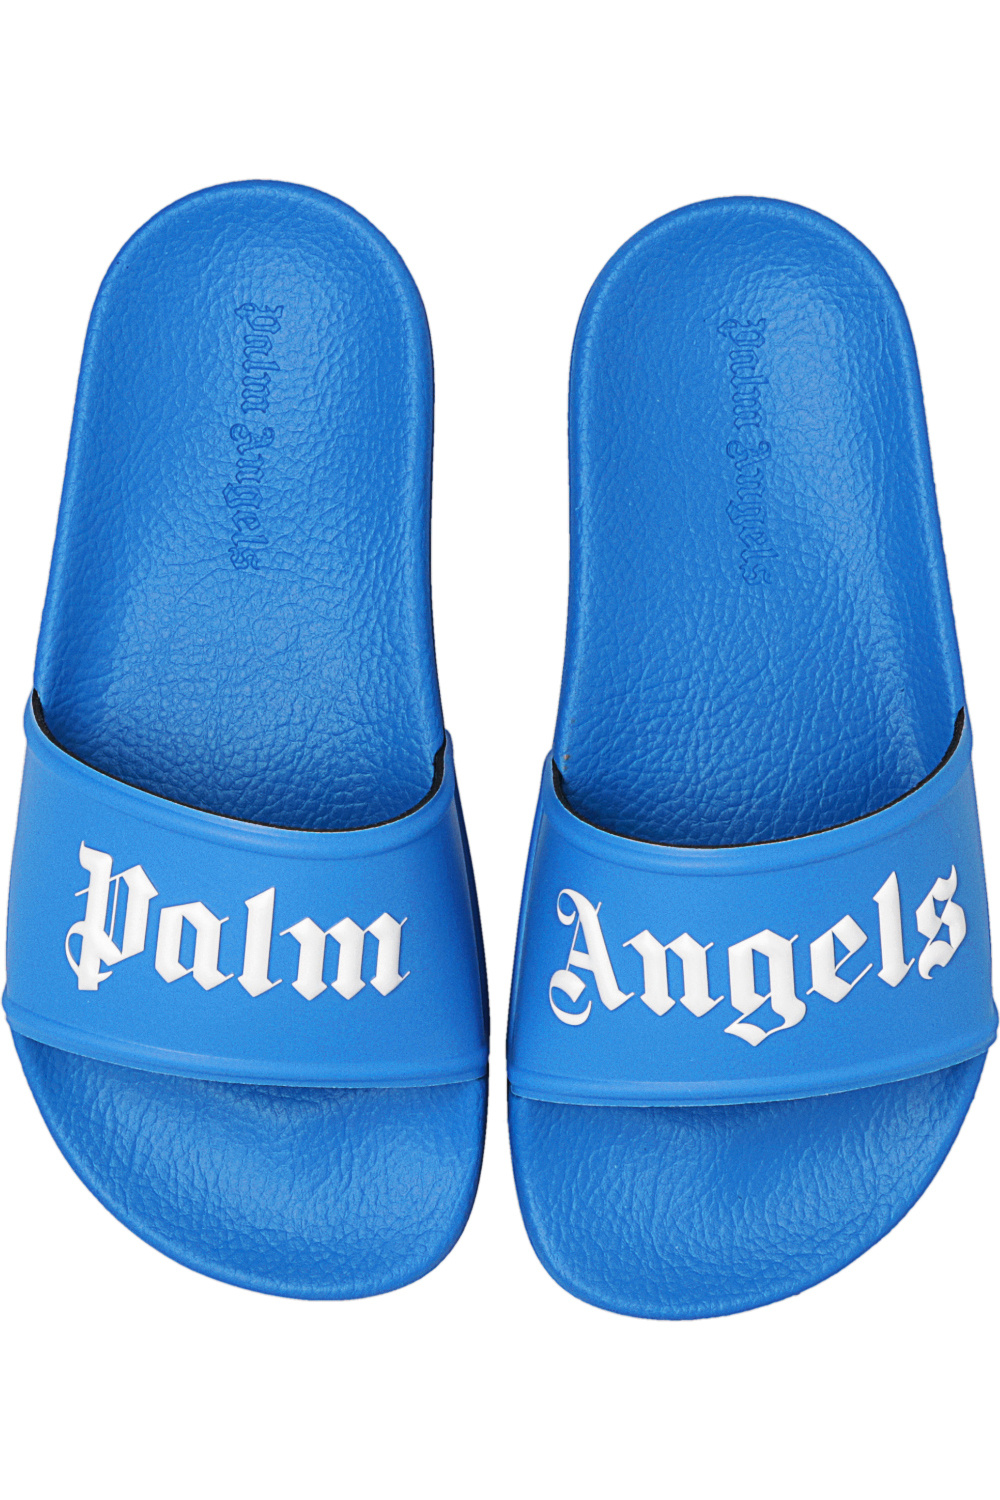 Palm Angels Kids Slides with logo